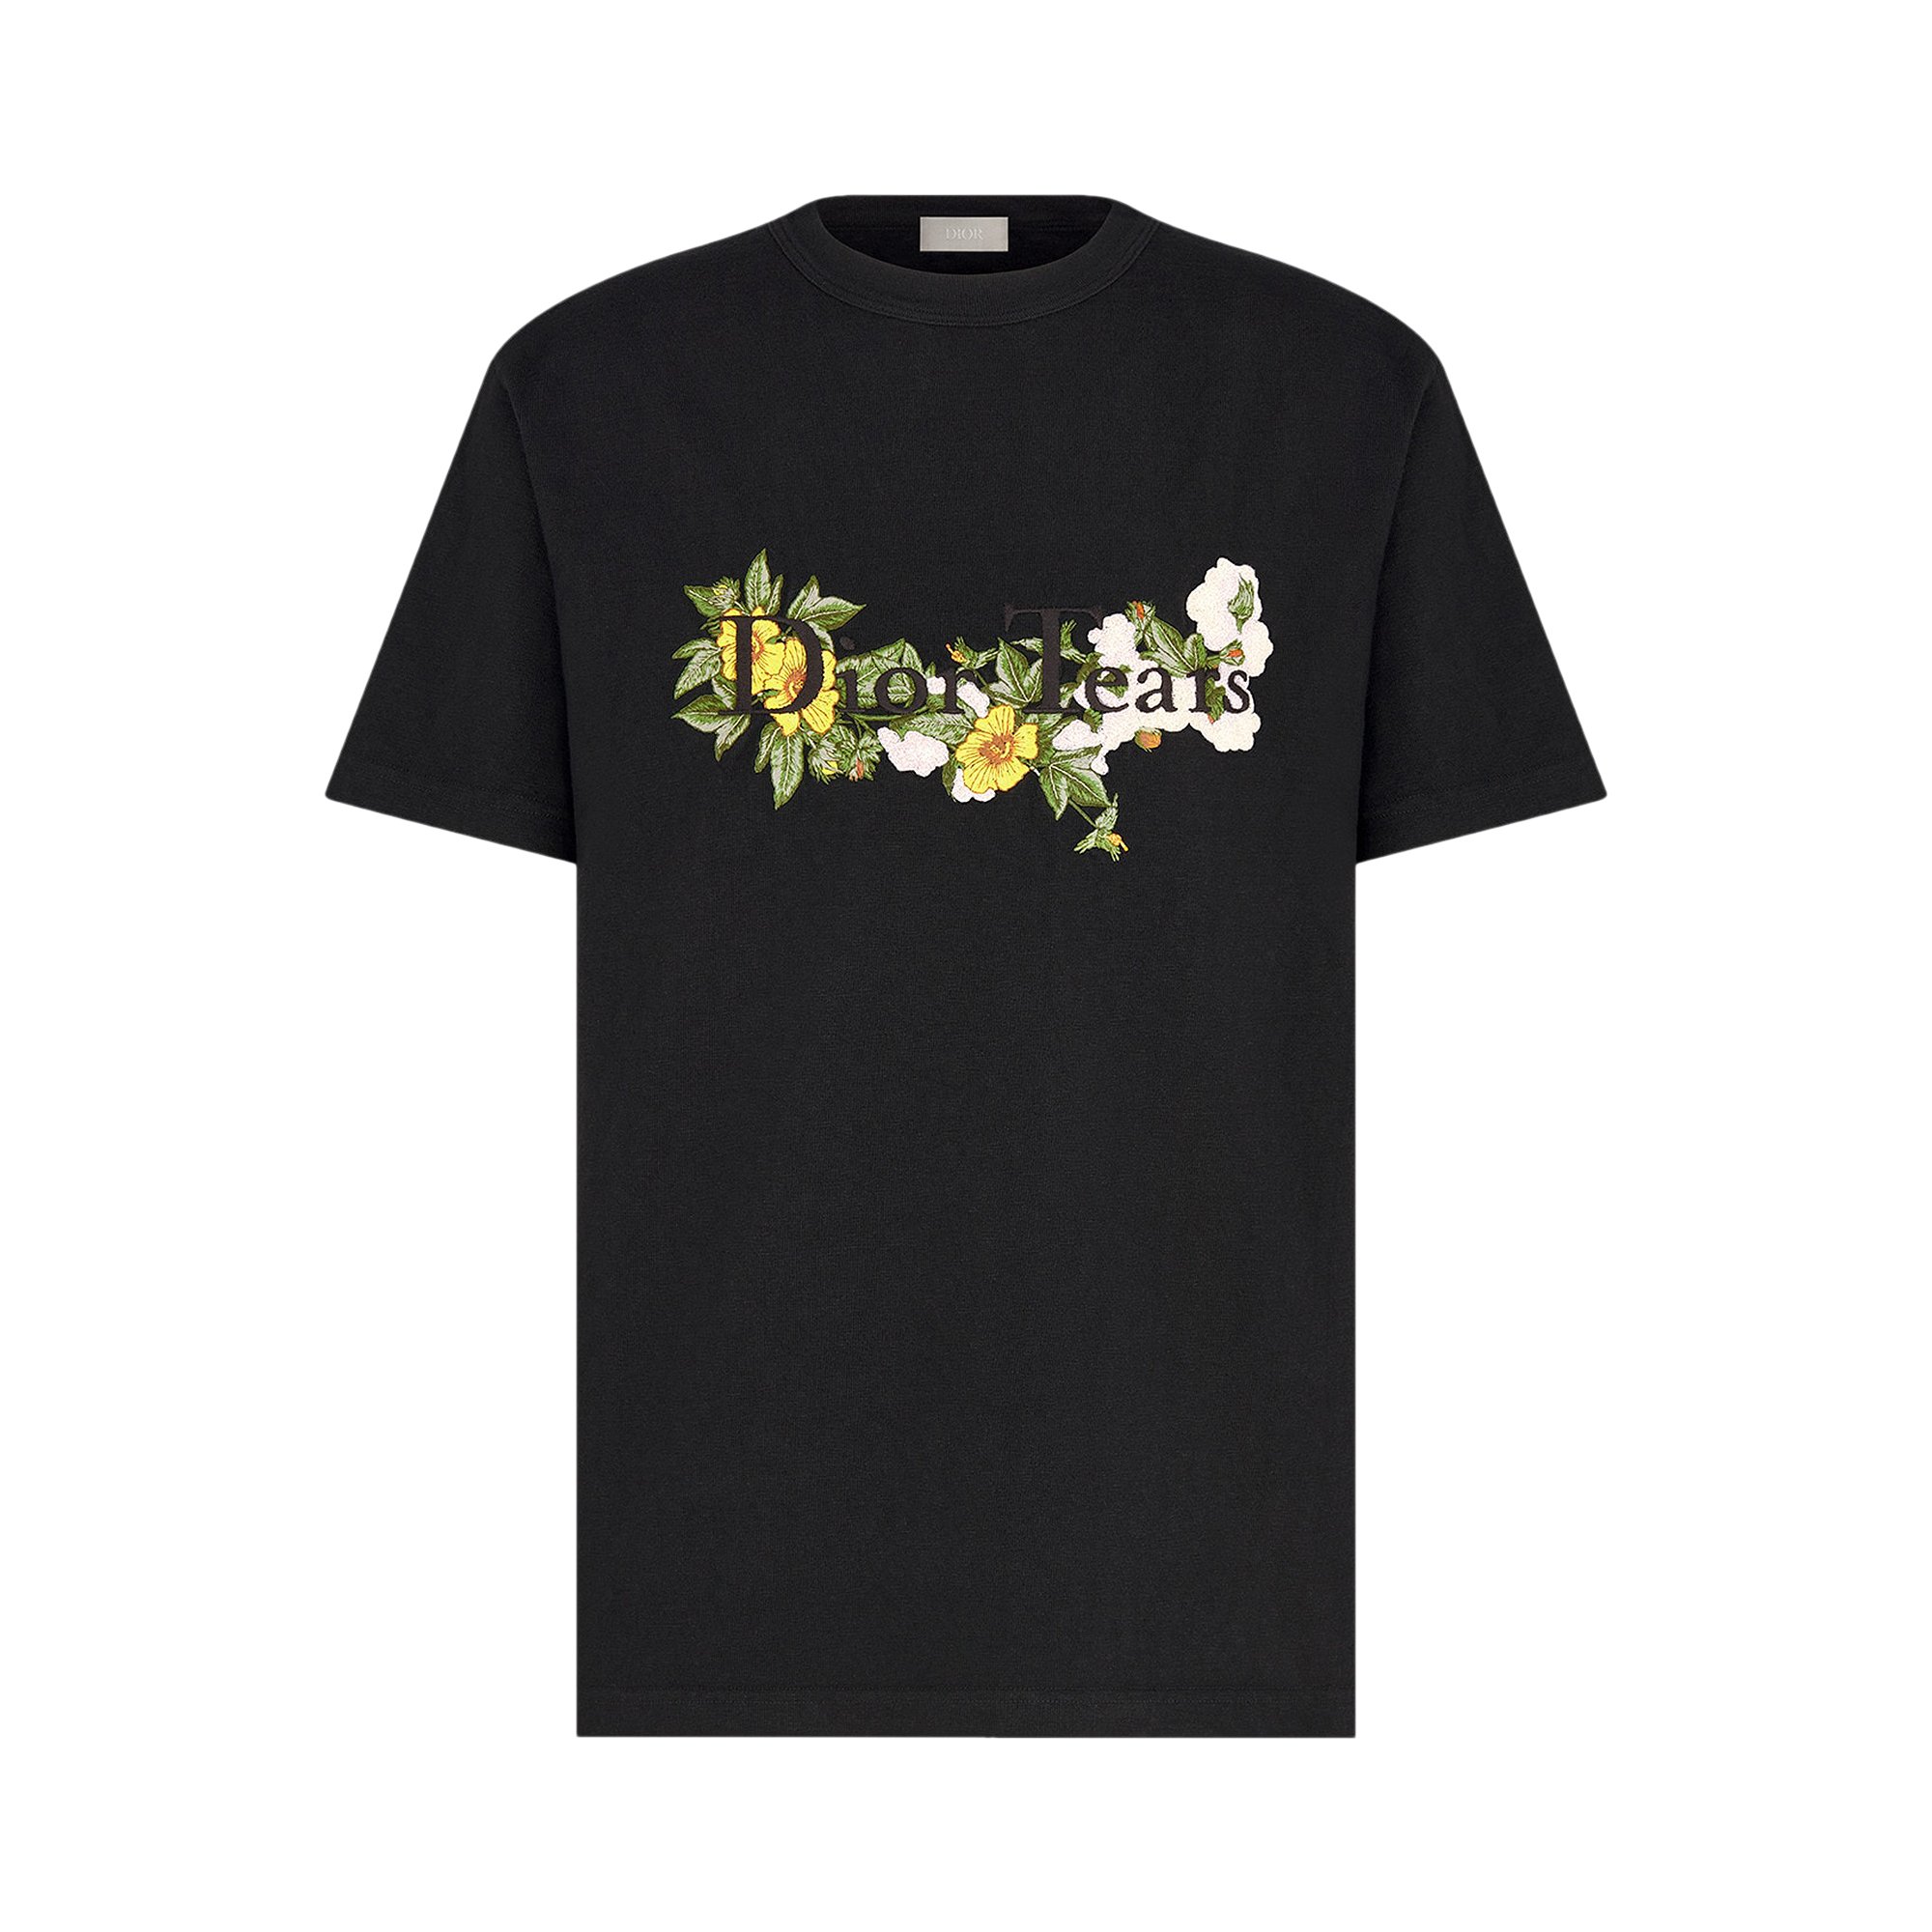 Buy Dior x Denim Tears T-Shirt 'Black' - 393J696I0849 C989 | GOAT CA